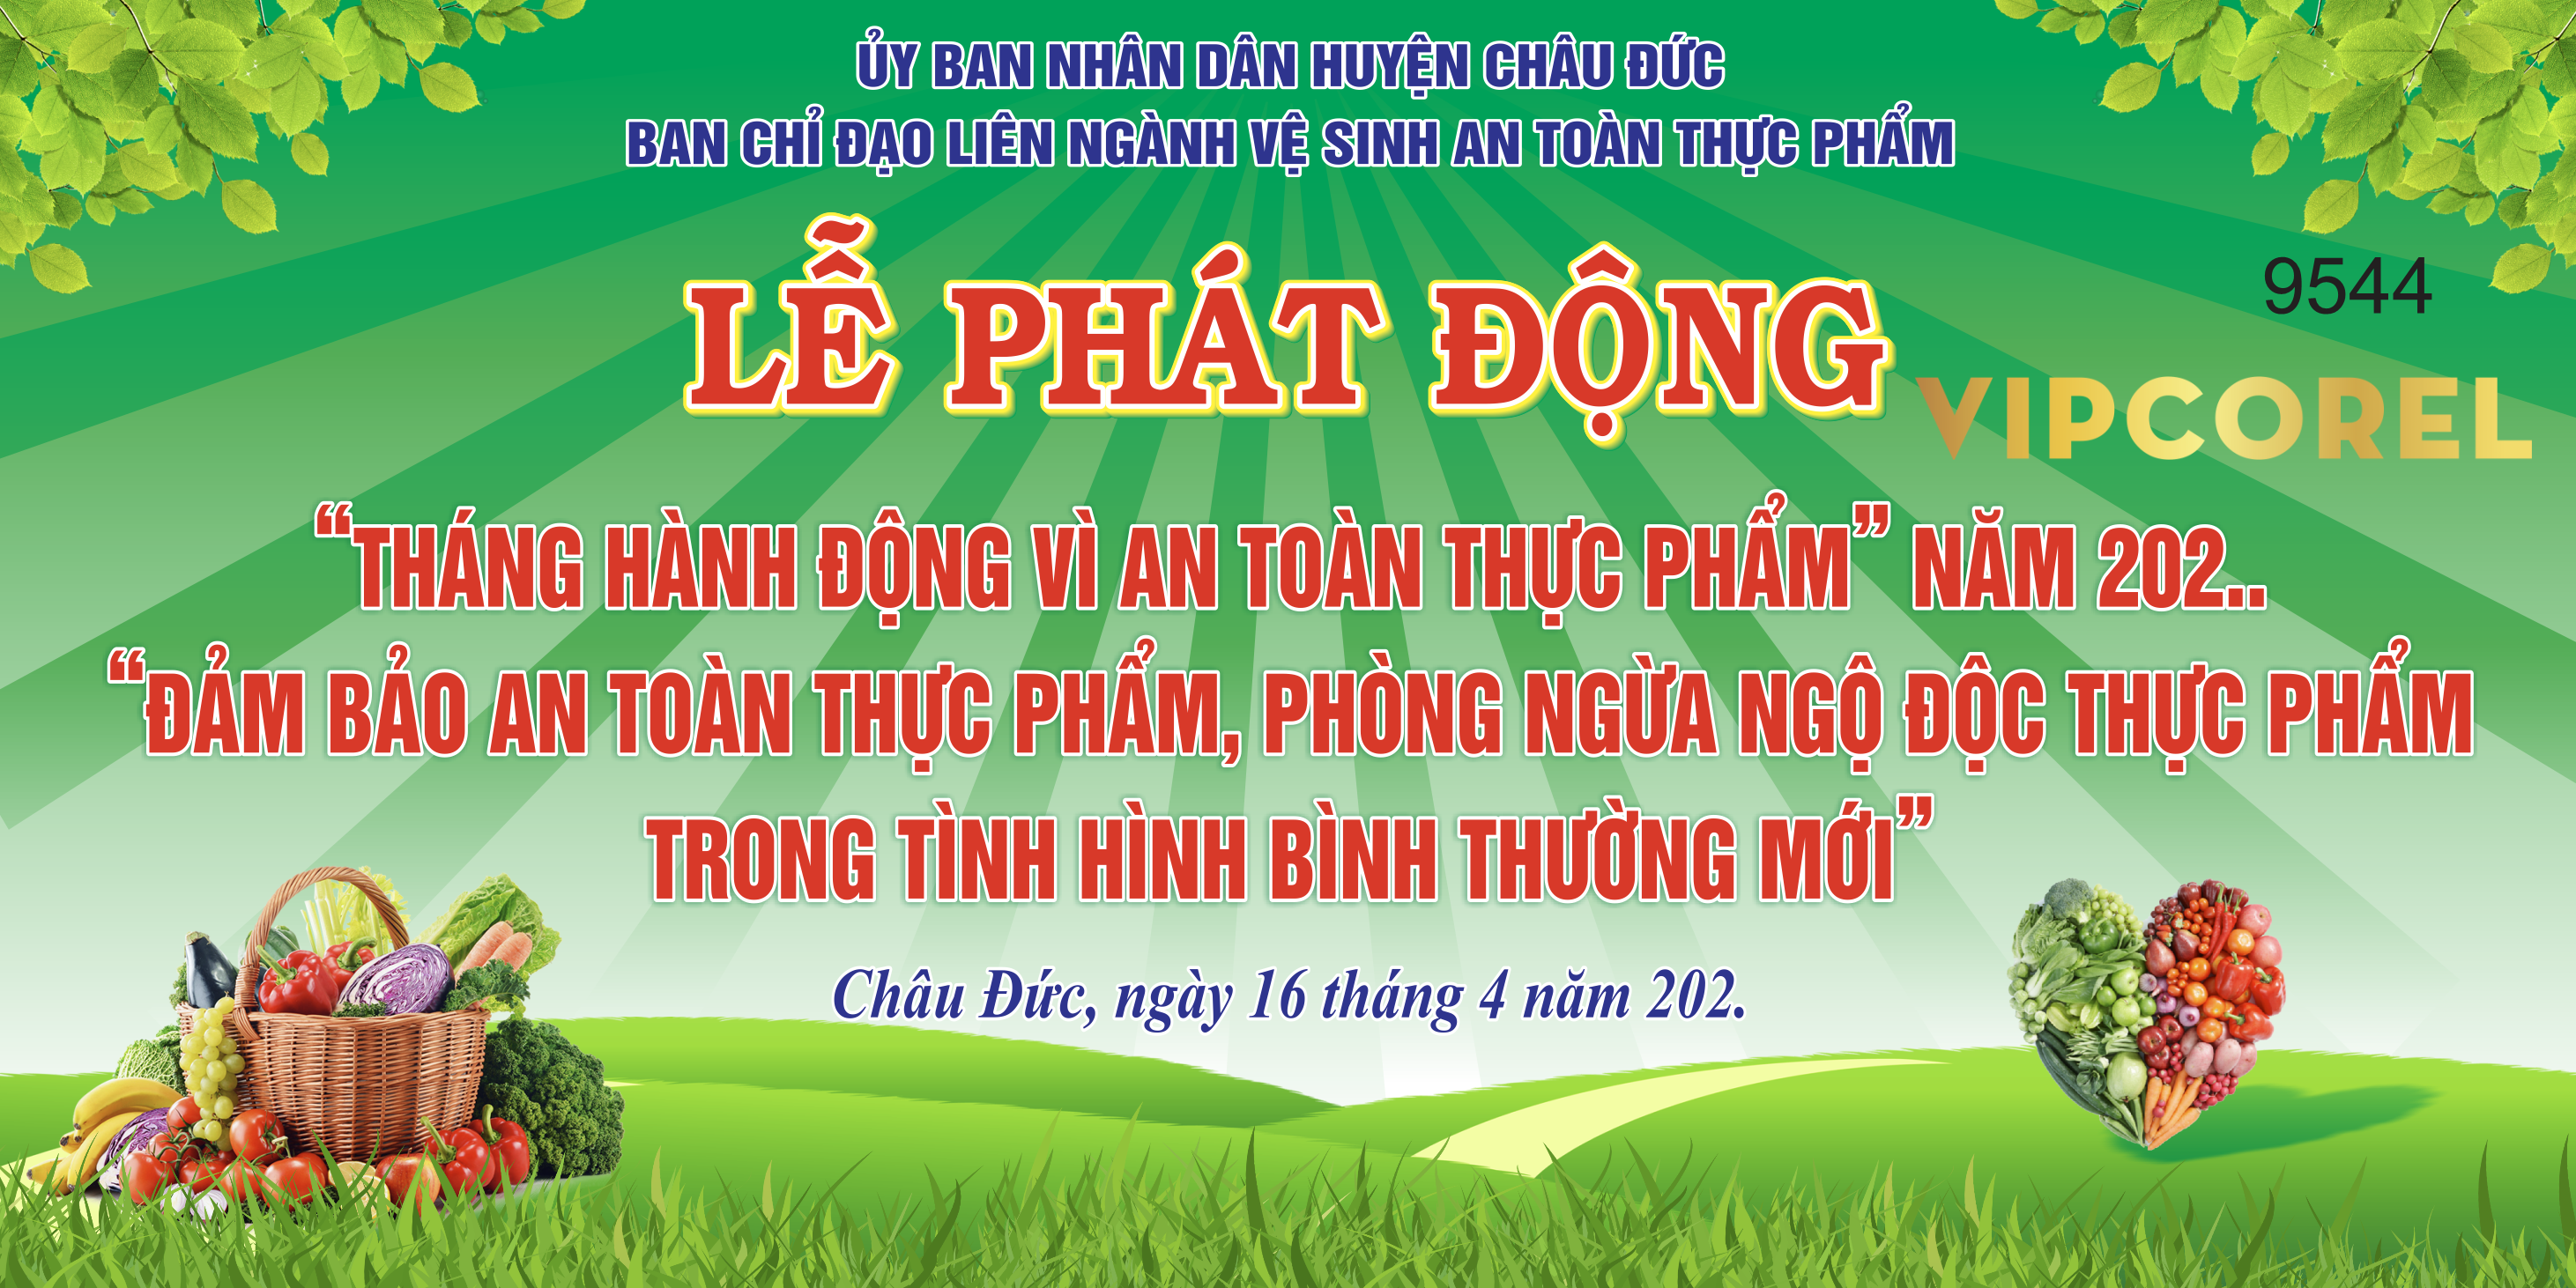 le phat dong thang hanh dong vi an toan thuc pham.png